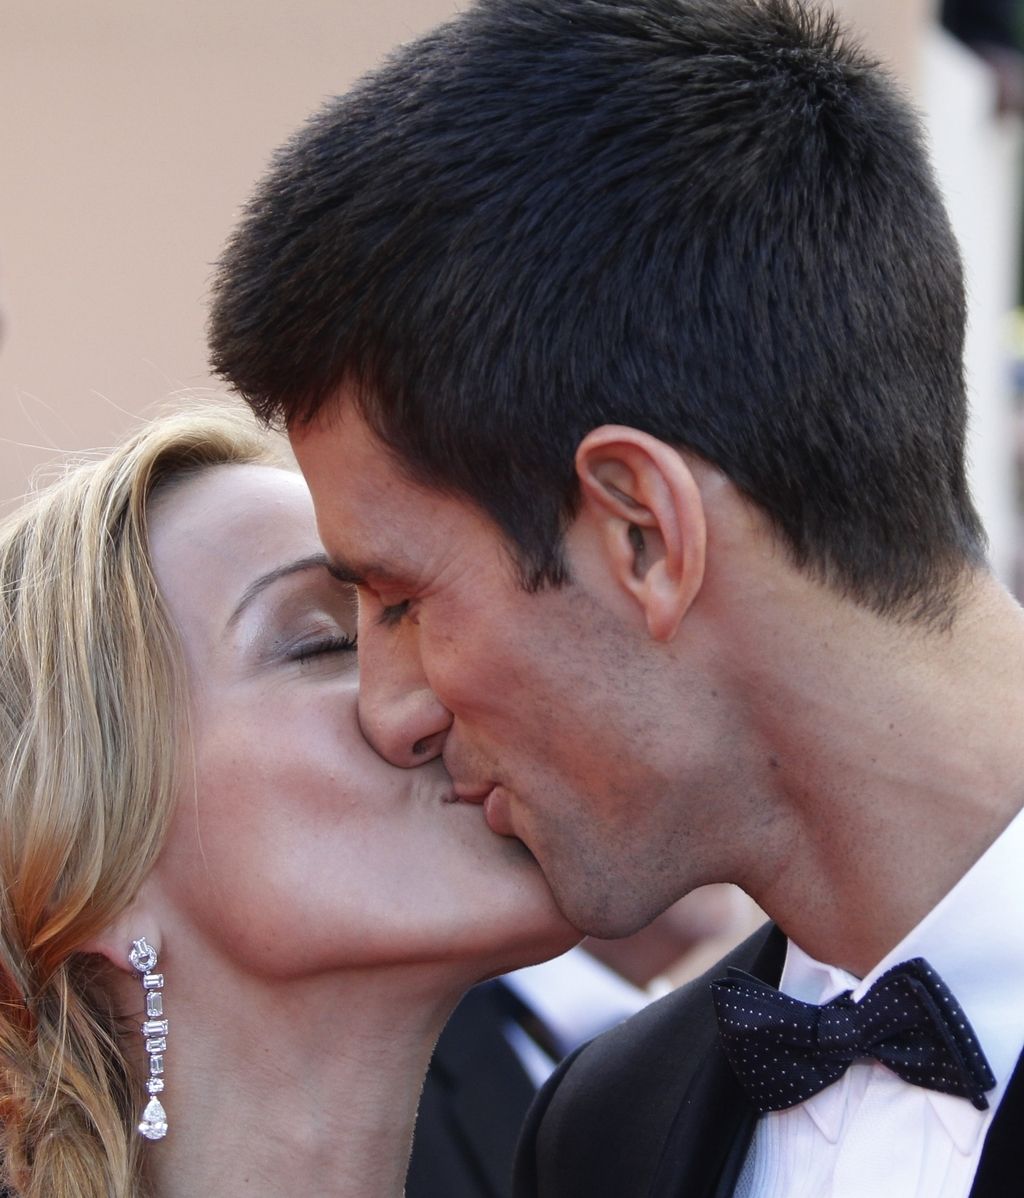 Jelena Ristic arrebata el protagonismo a su novio Djokovic en el US Open 2011